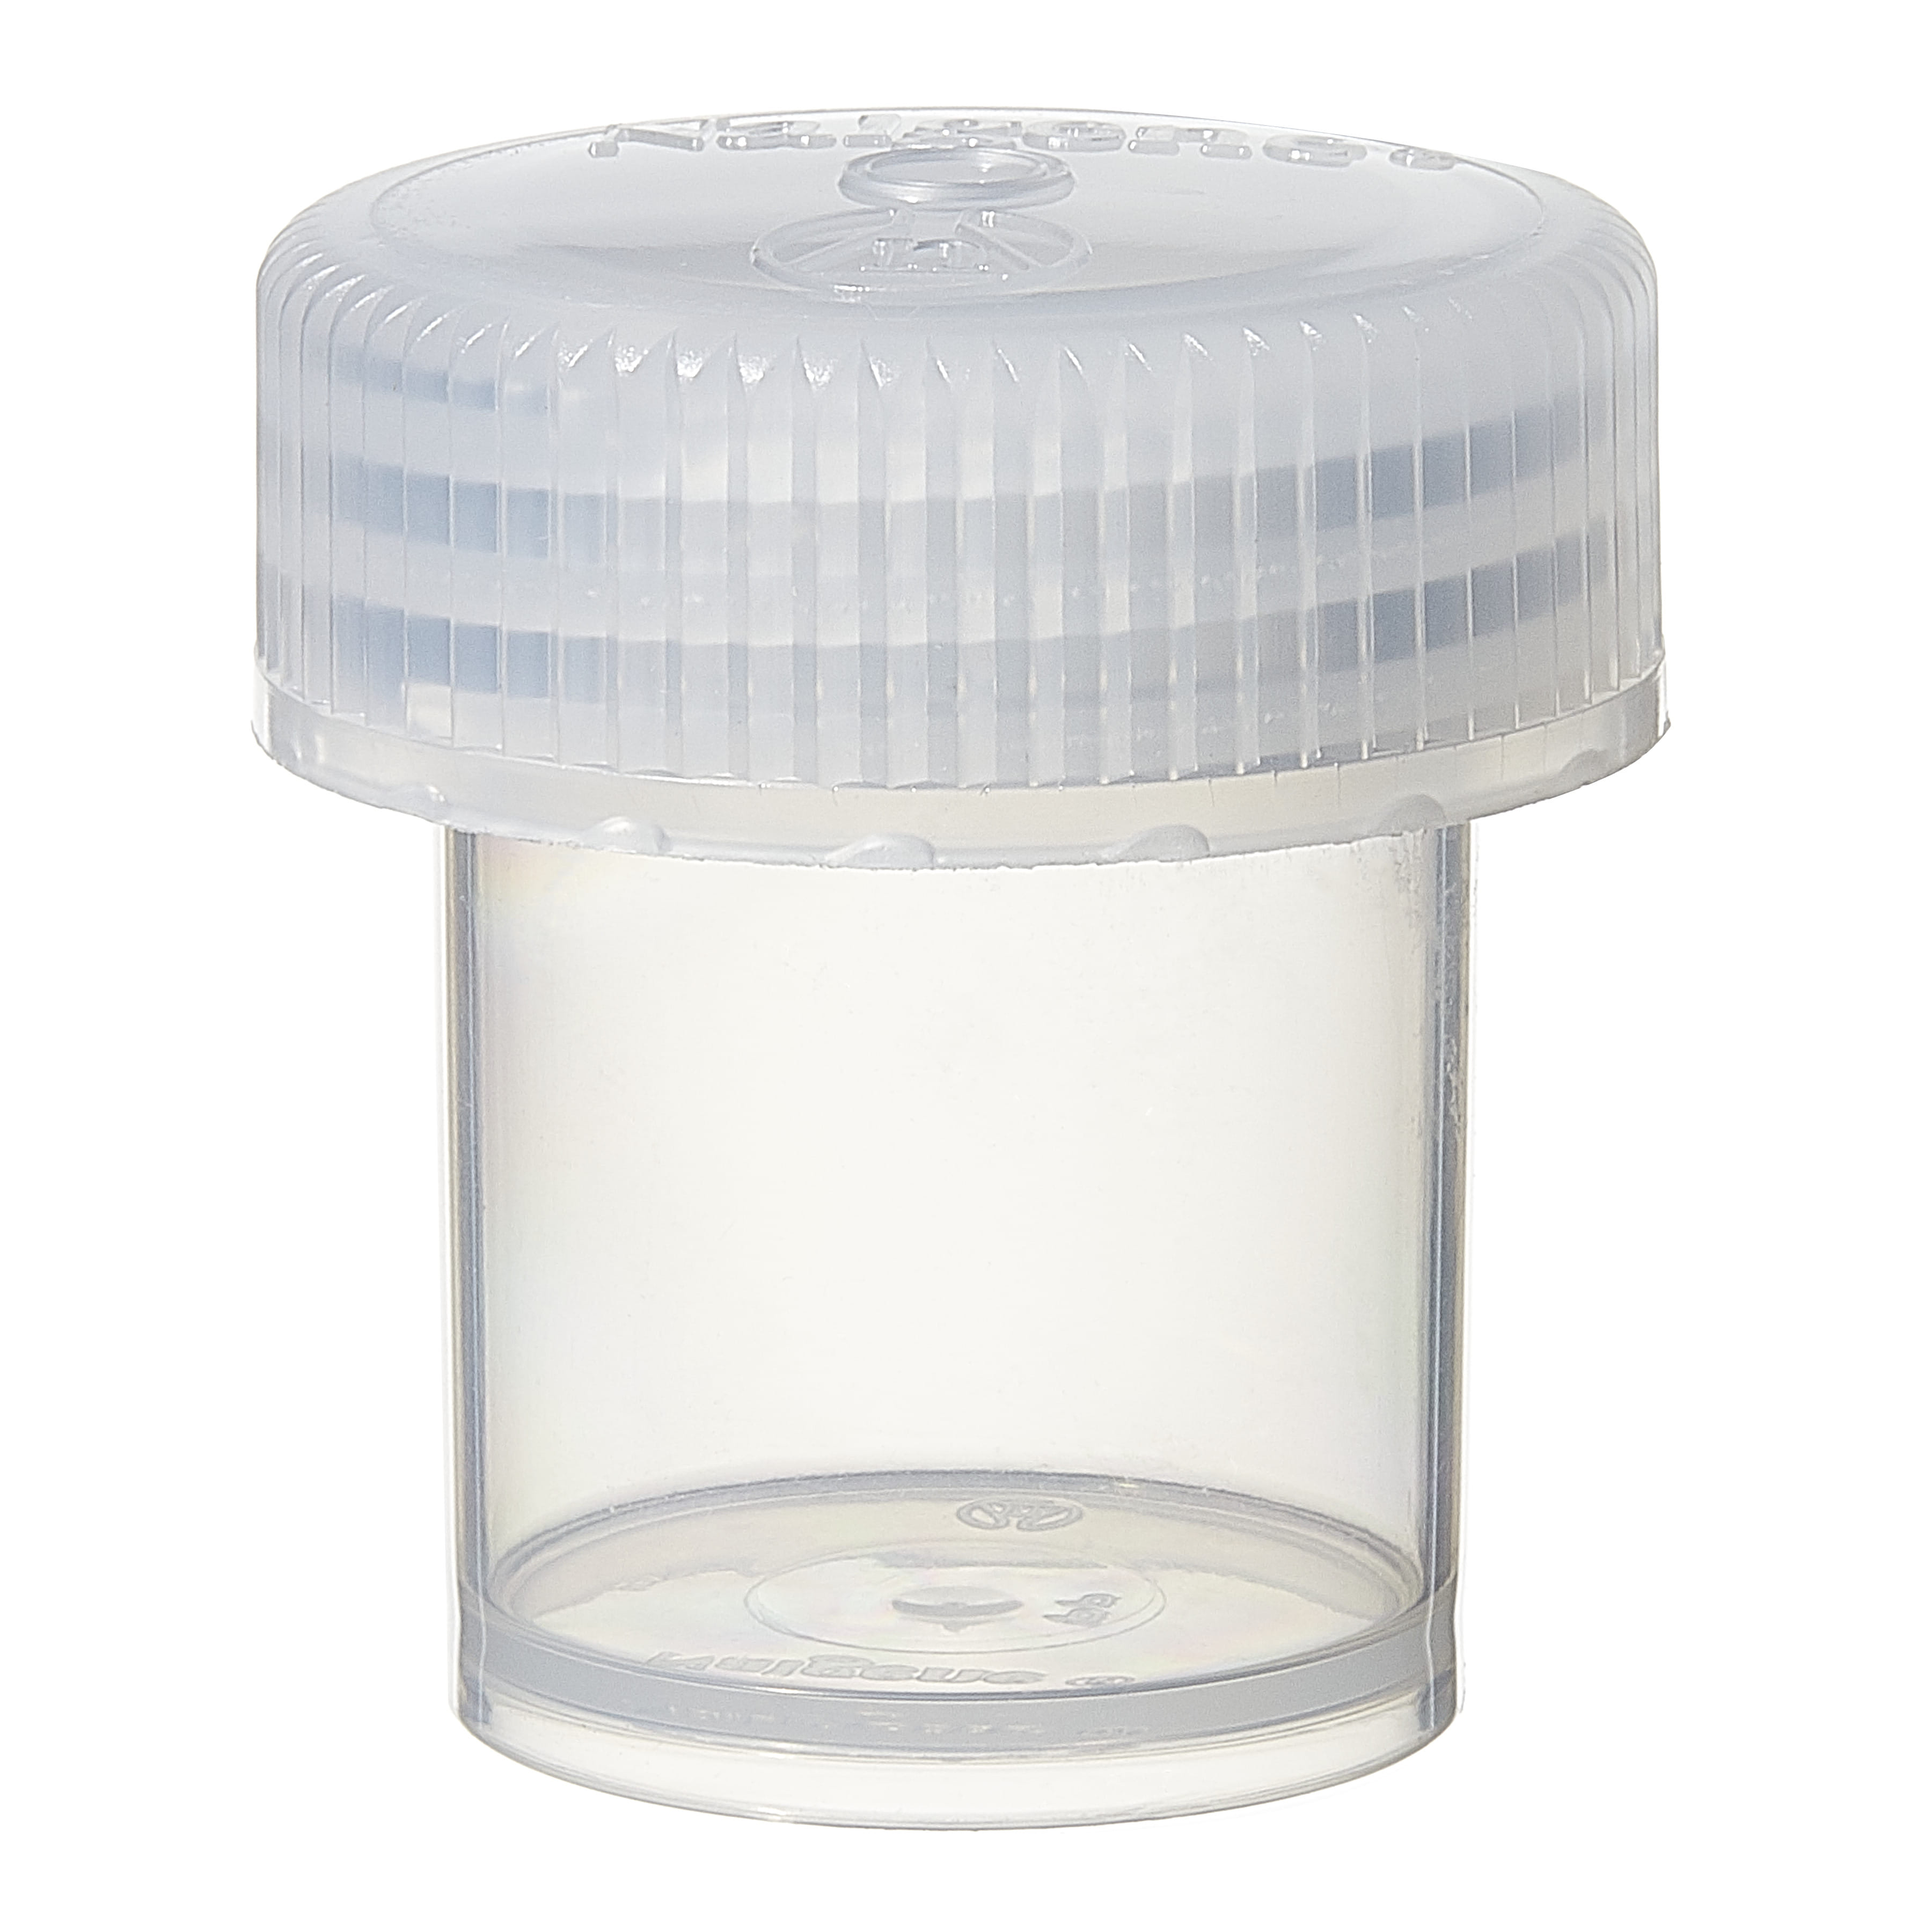 [Thermo Nalgene] 2118-9050 / 15mL Nalgene Wide-Mouth Straight-Sided PPCO Jar